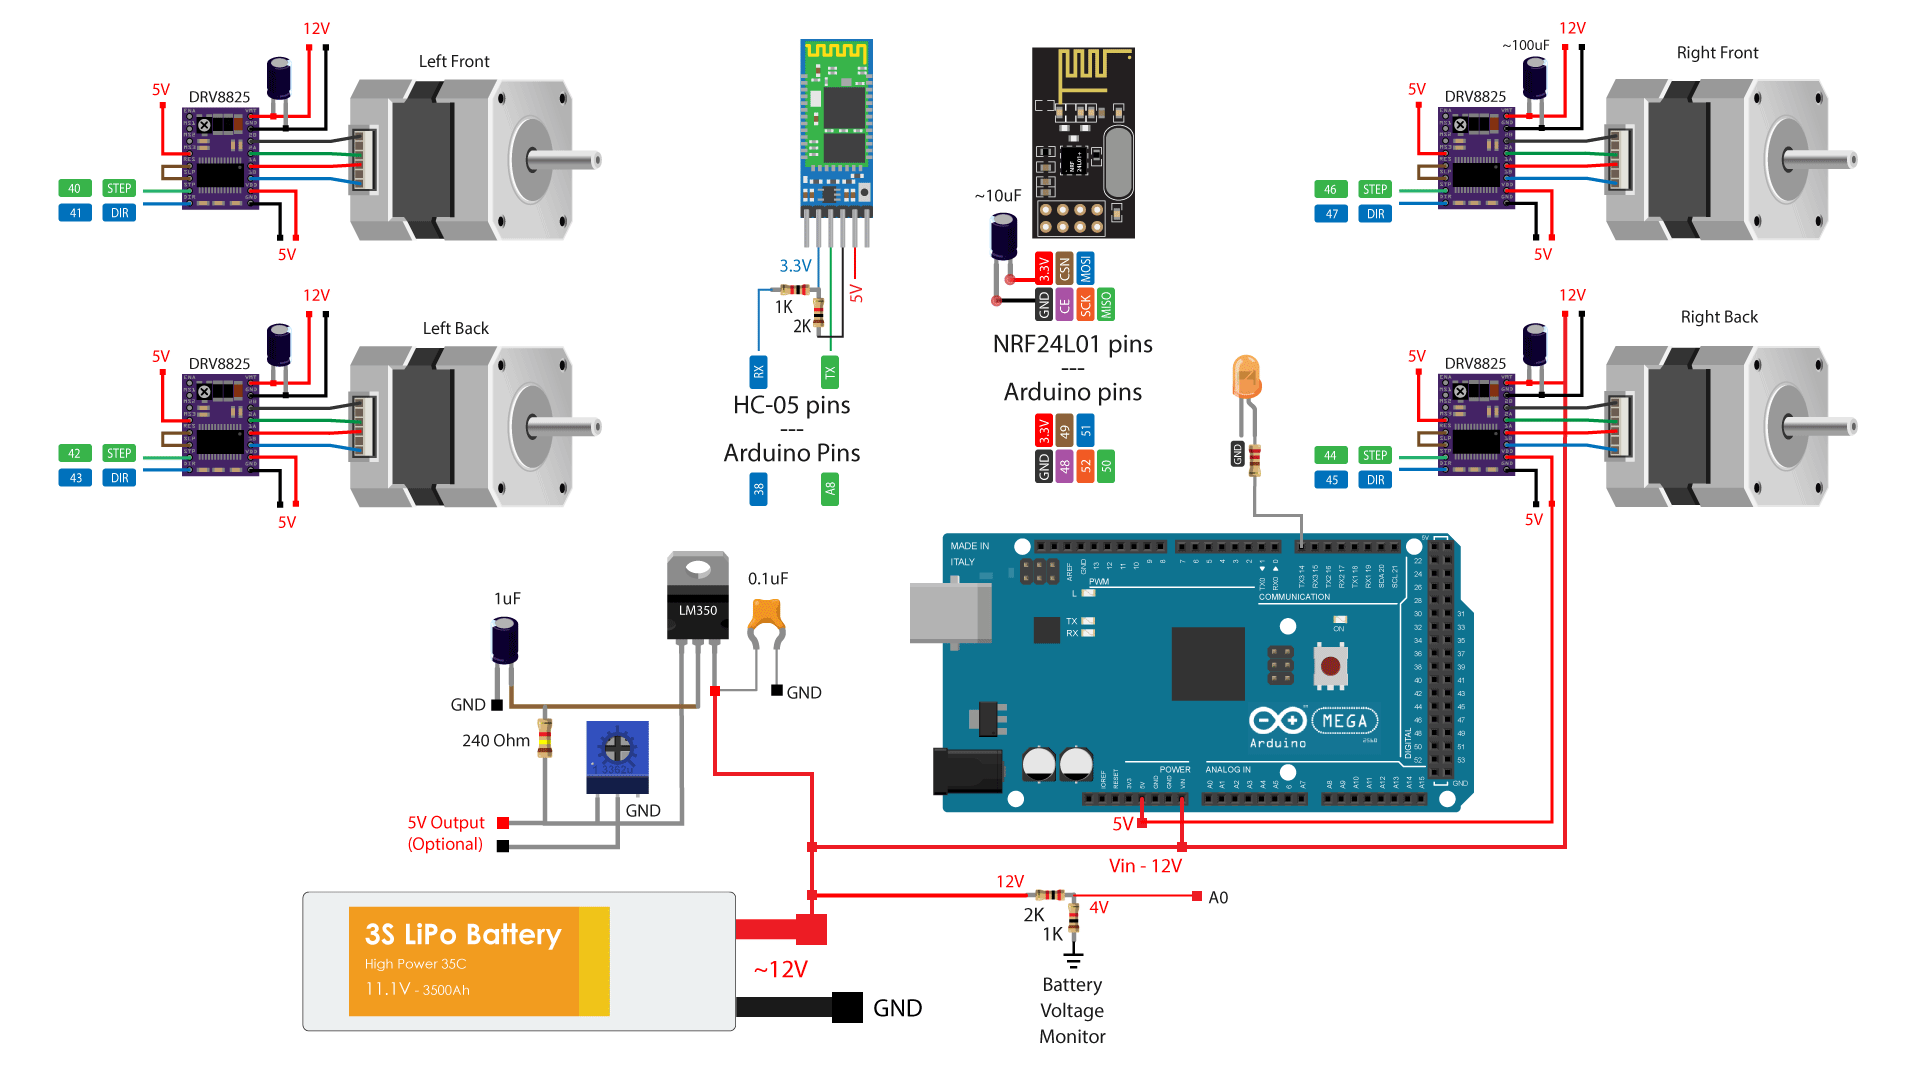 https://howtomechatronics.com/wp-content/uploads/2019/05/Arduino-Mecanum-Wheels-Robot-Circuit-Diagram.png